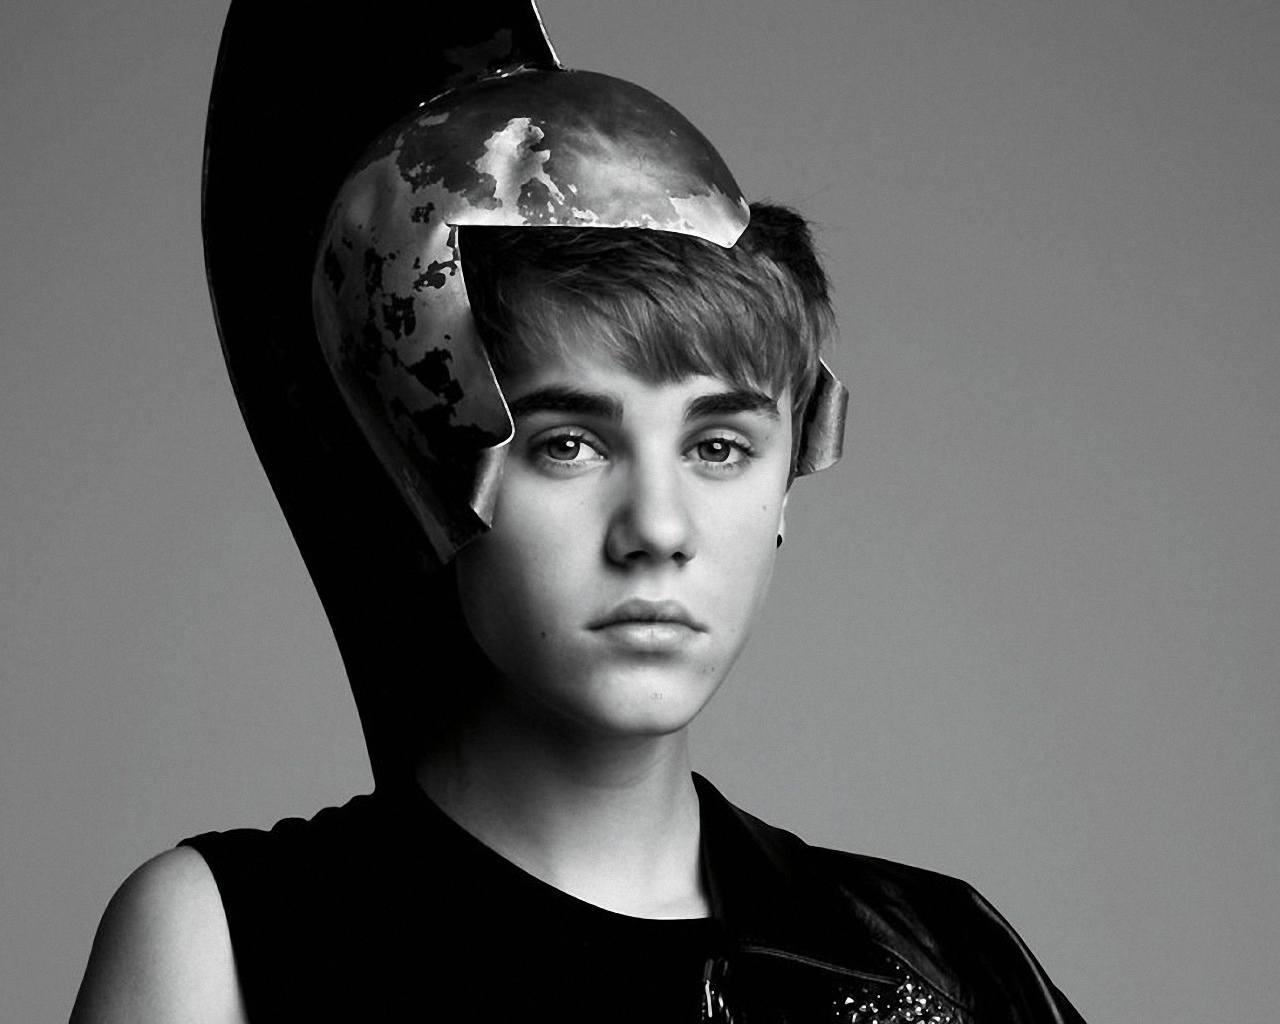 Justin Bieber Cool wallpaper. Justin Bieber Cool